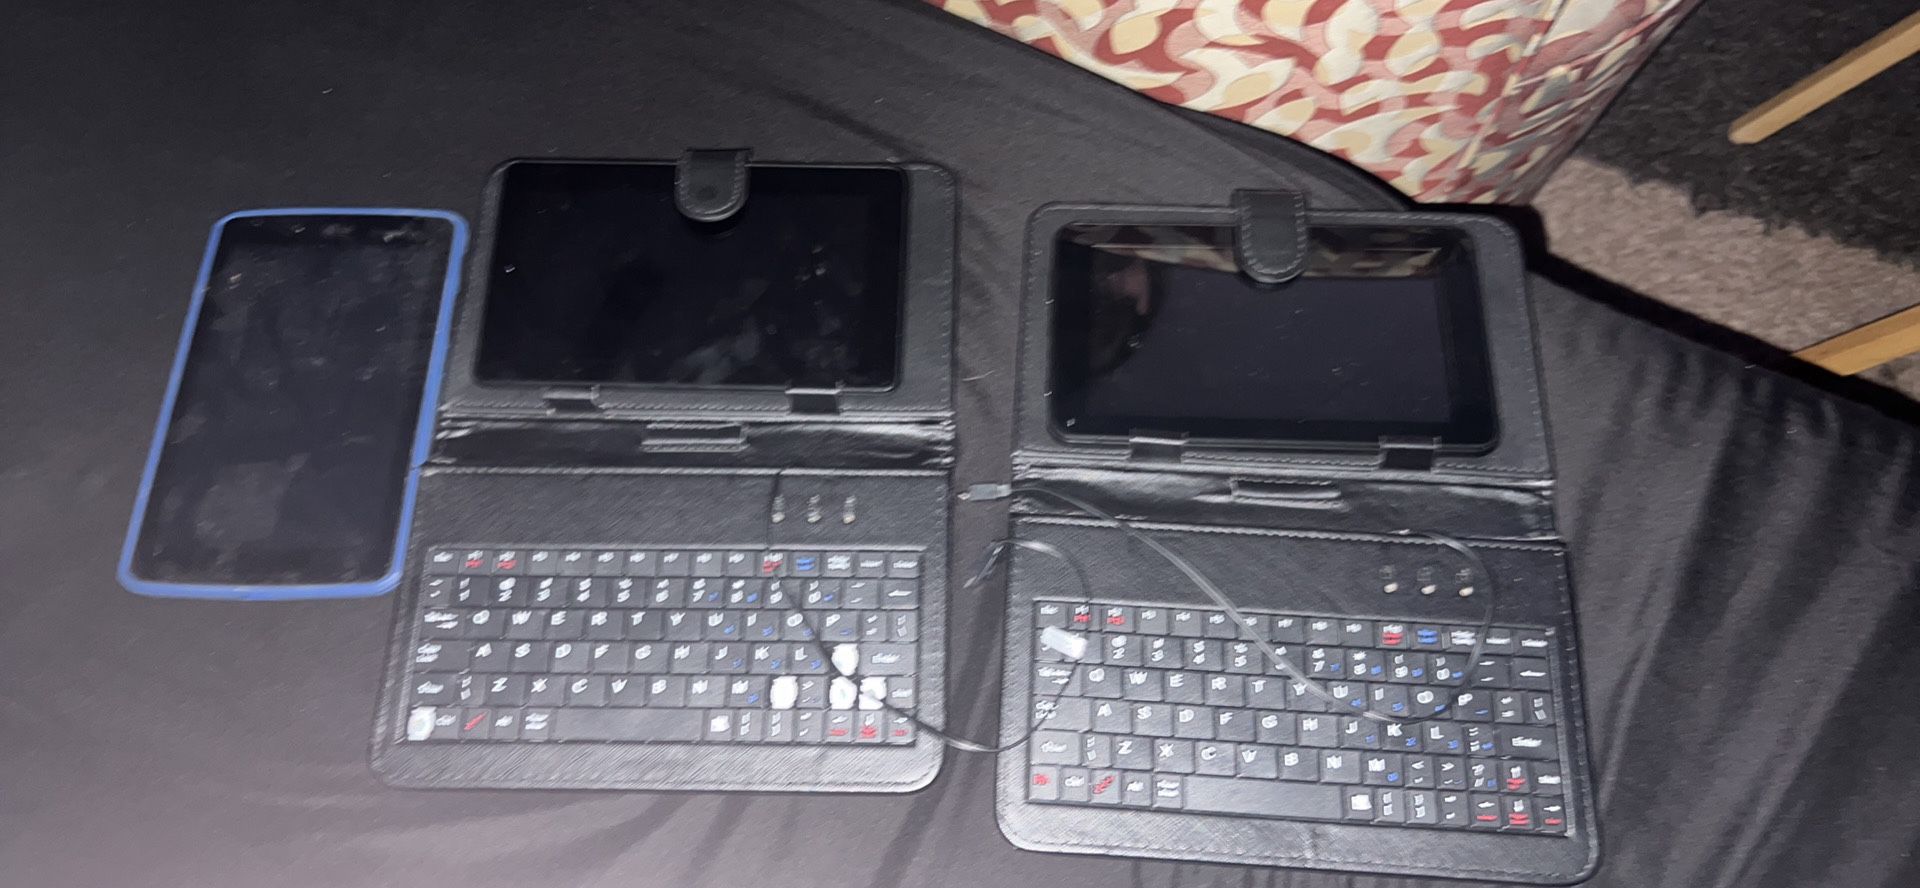 kindle tablets 